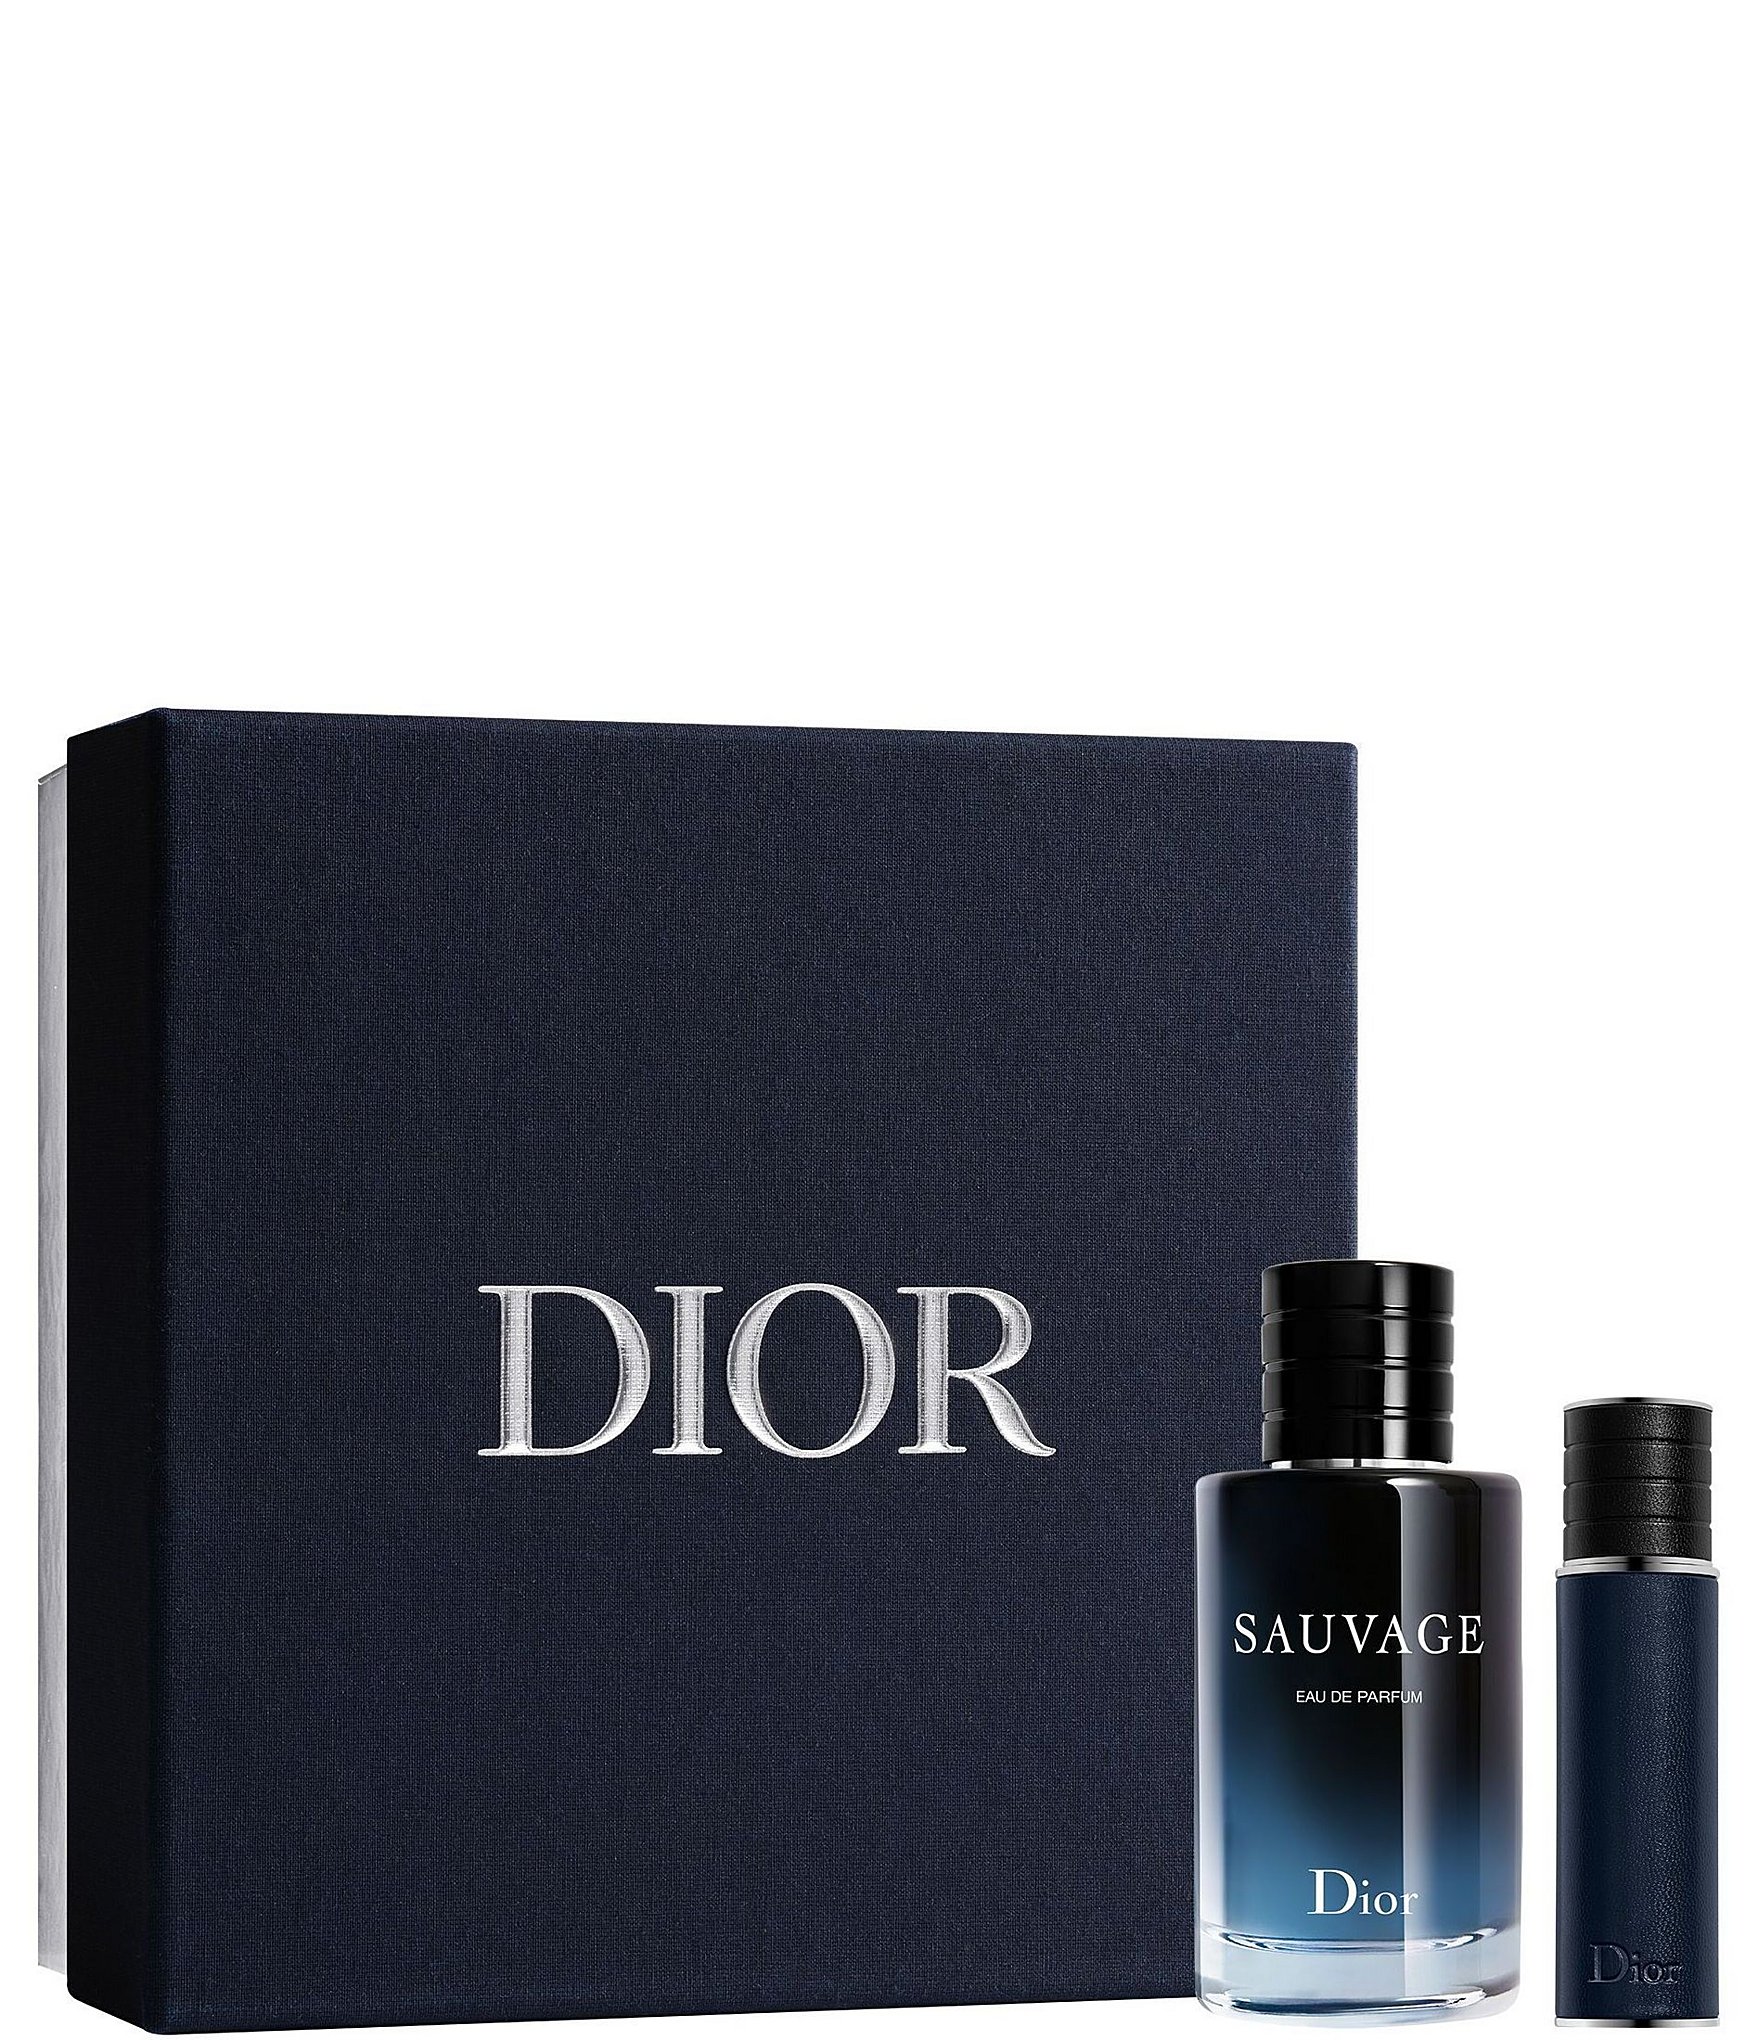 Dior Sauvage Eau de Parfum Gift Set - Limited Edition | Dillard's